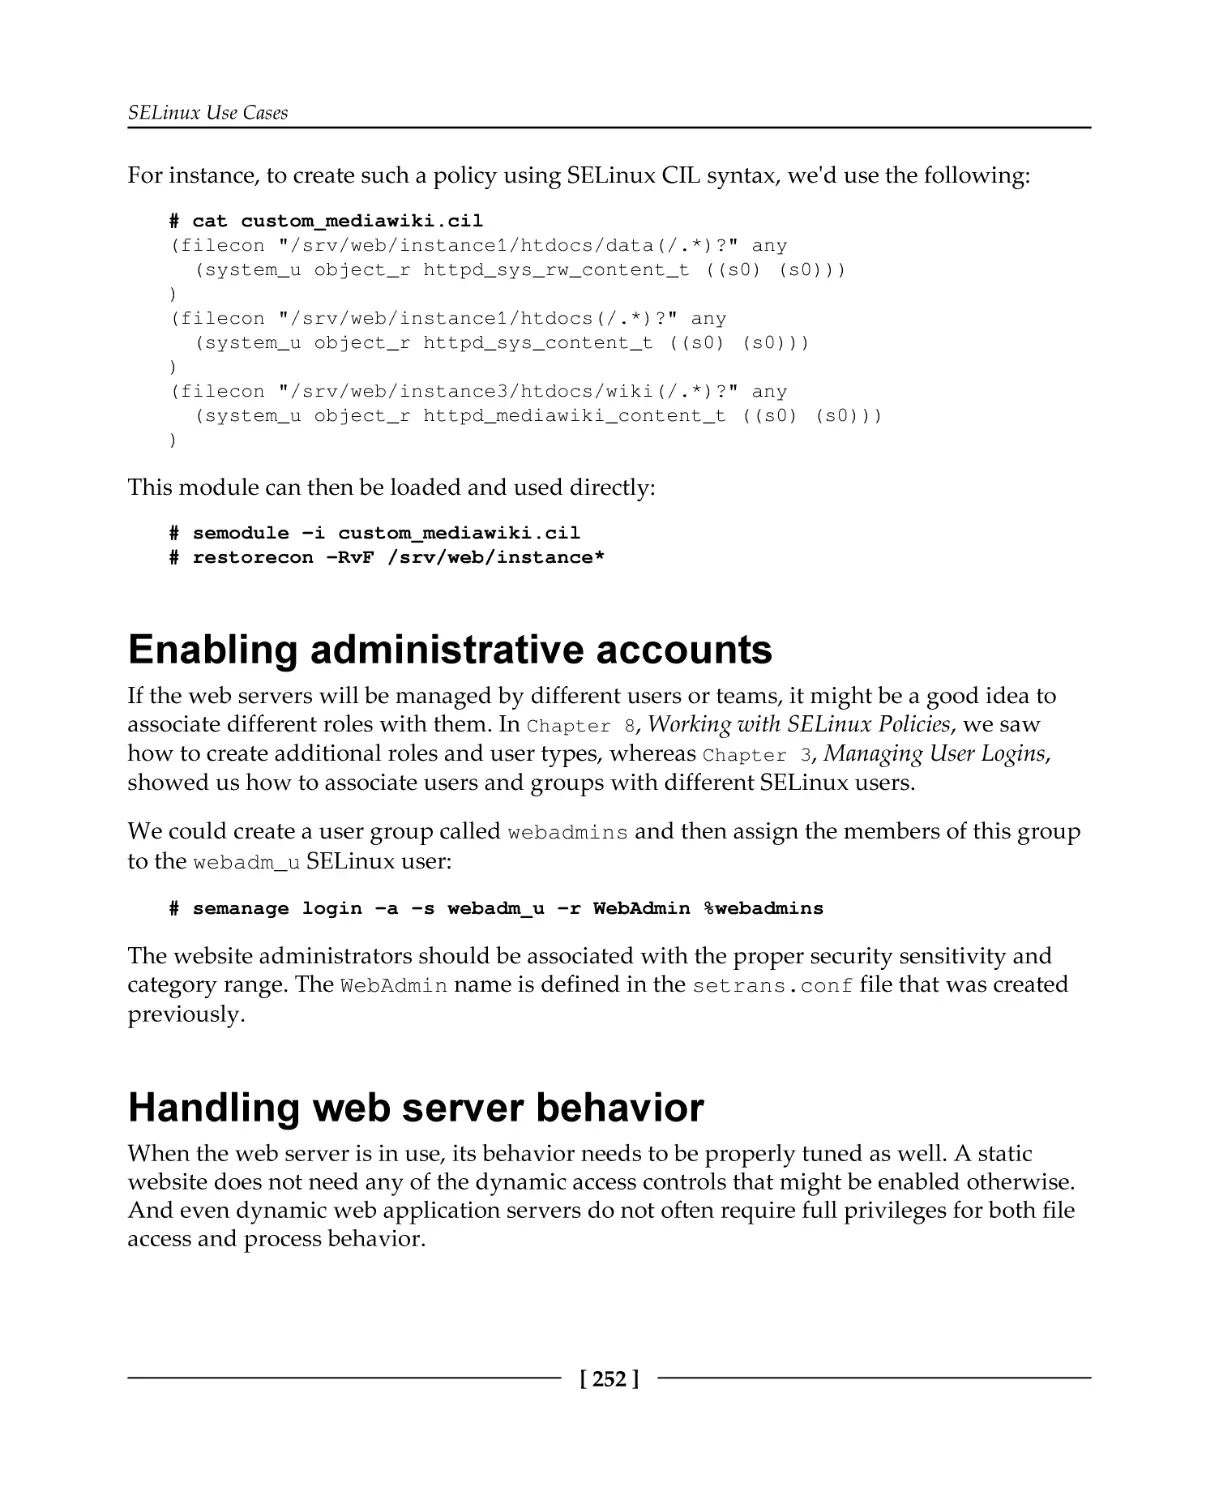 Enabling administrative accounts
Handling web server behavior